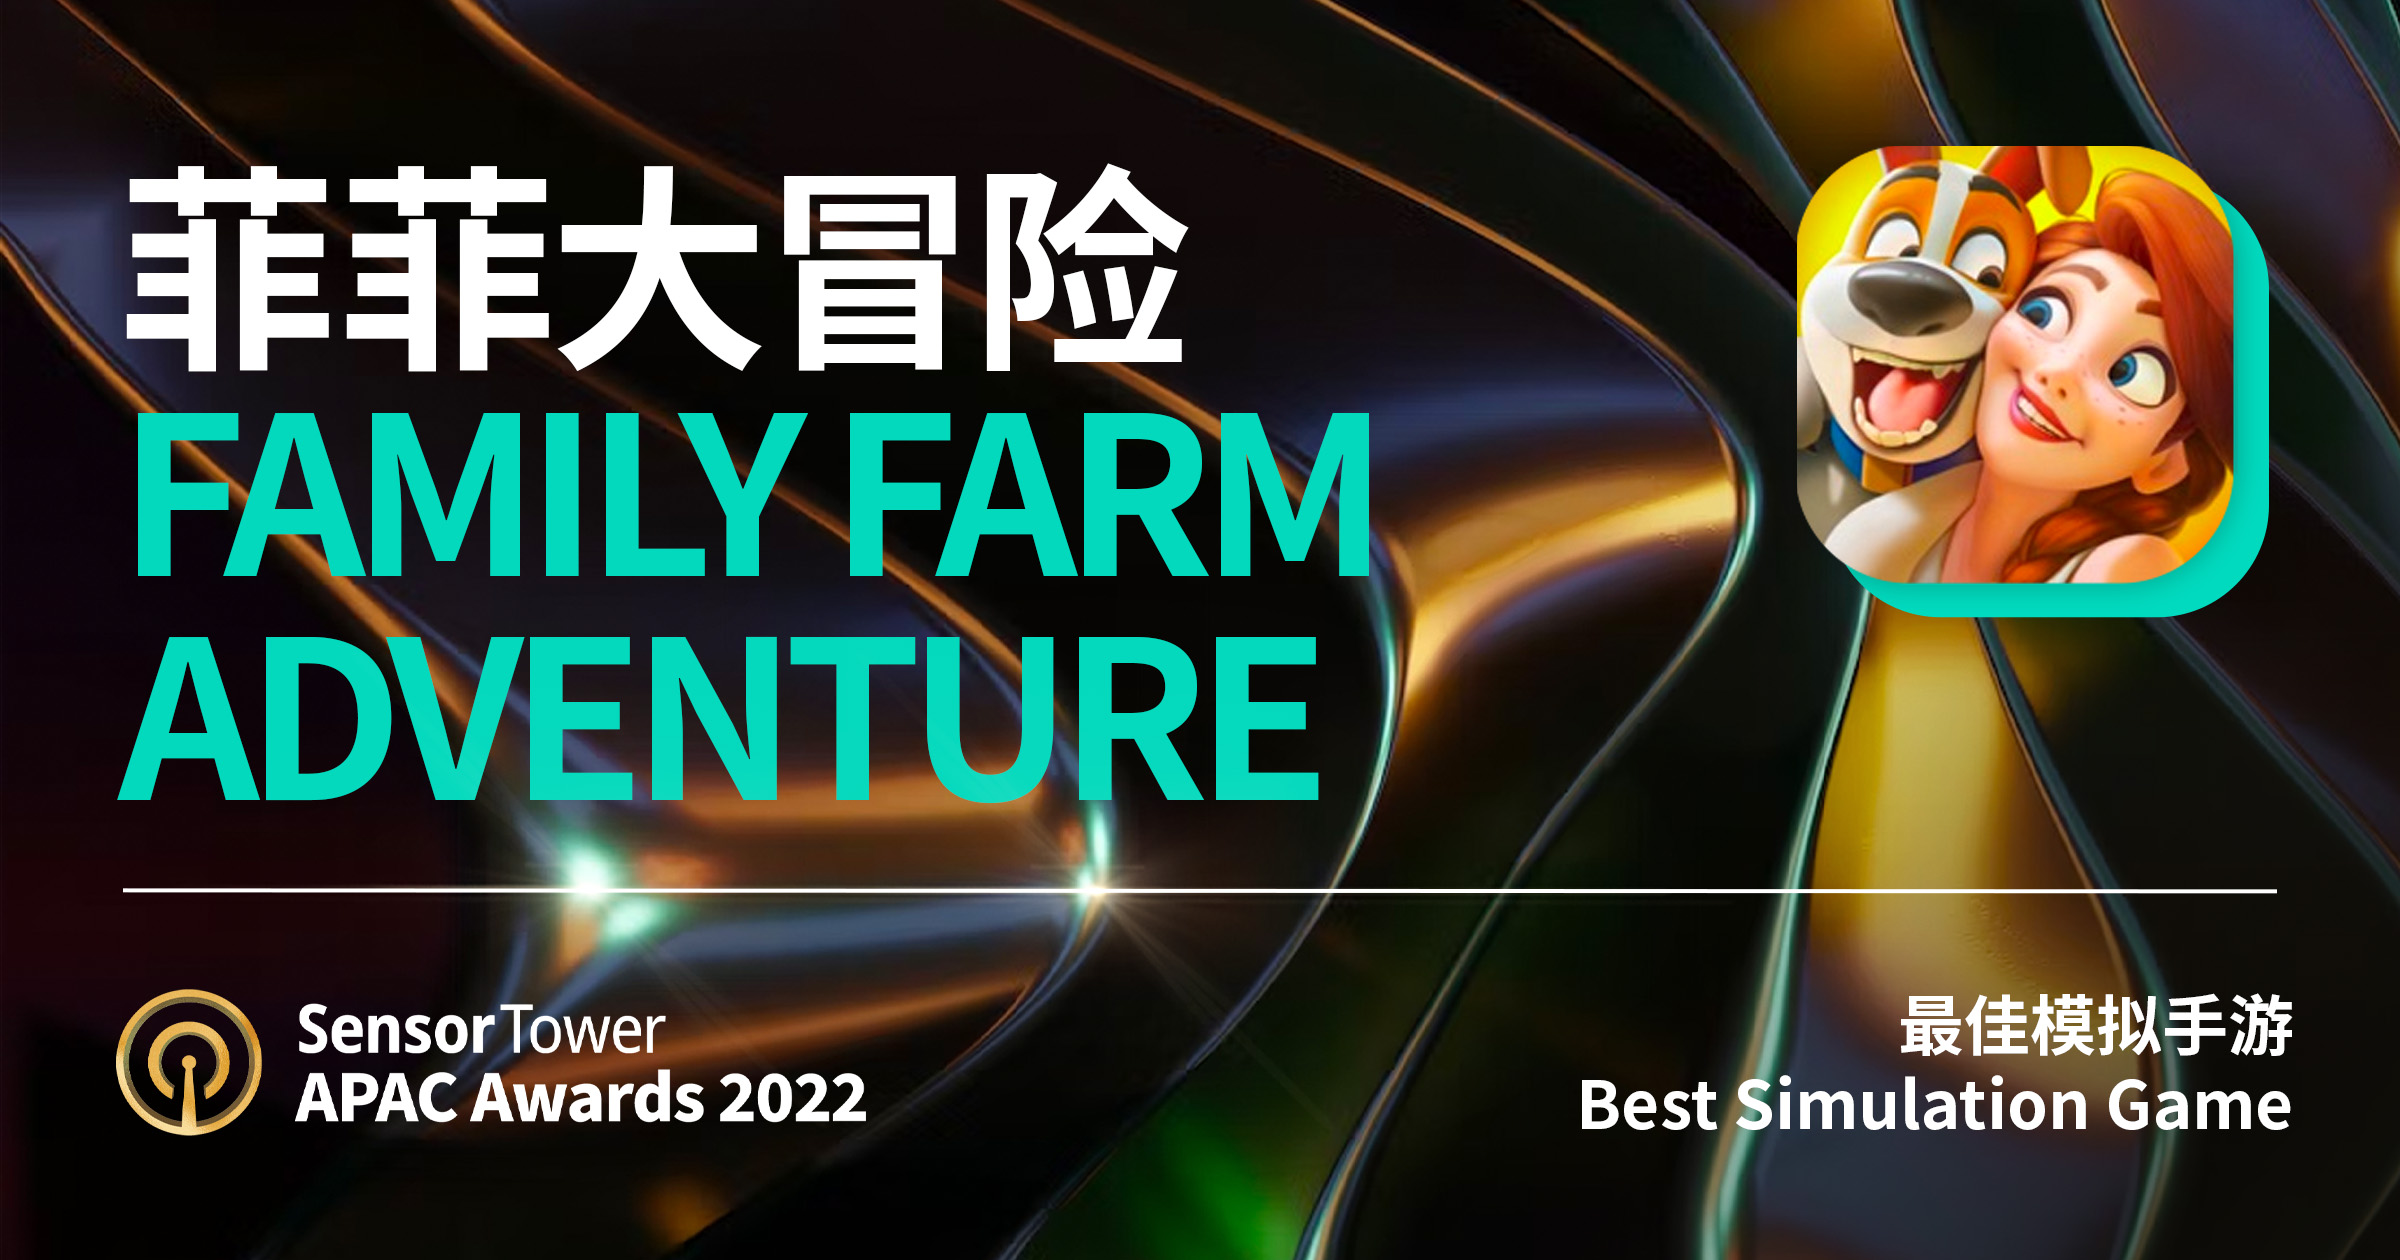 2022 APAC Awards Family Farm Adventure